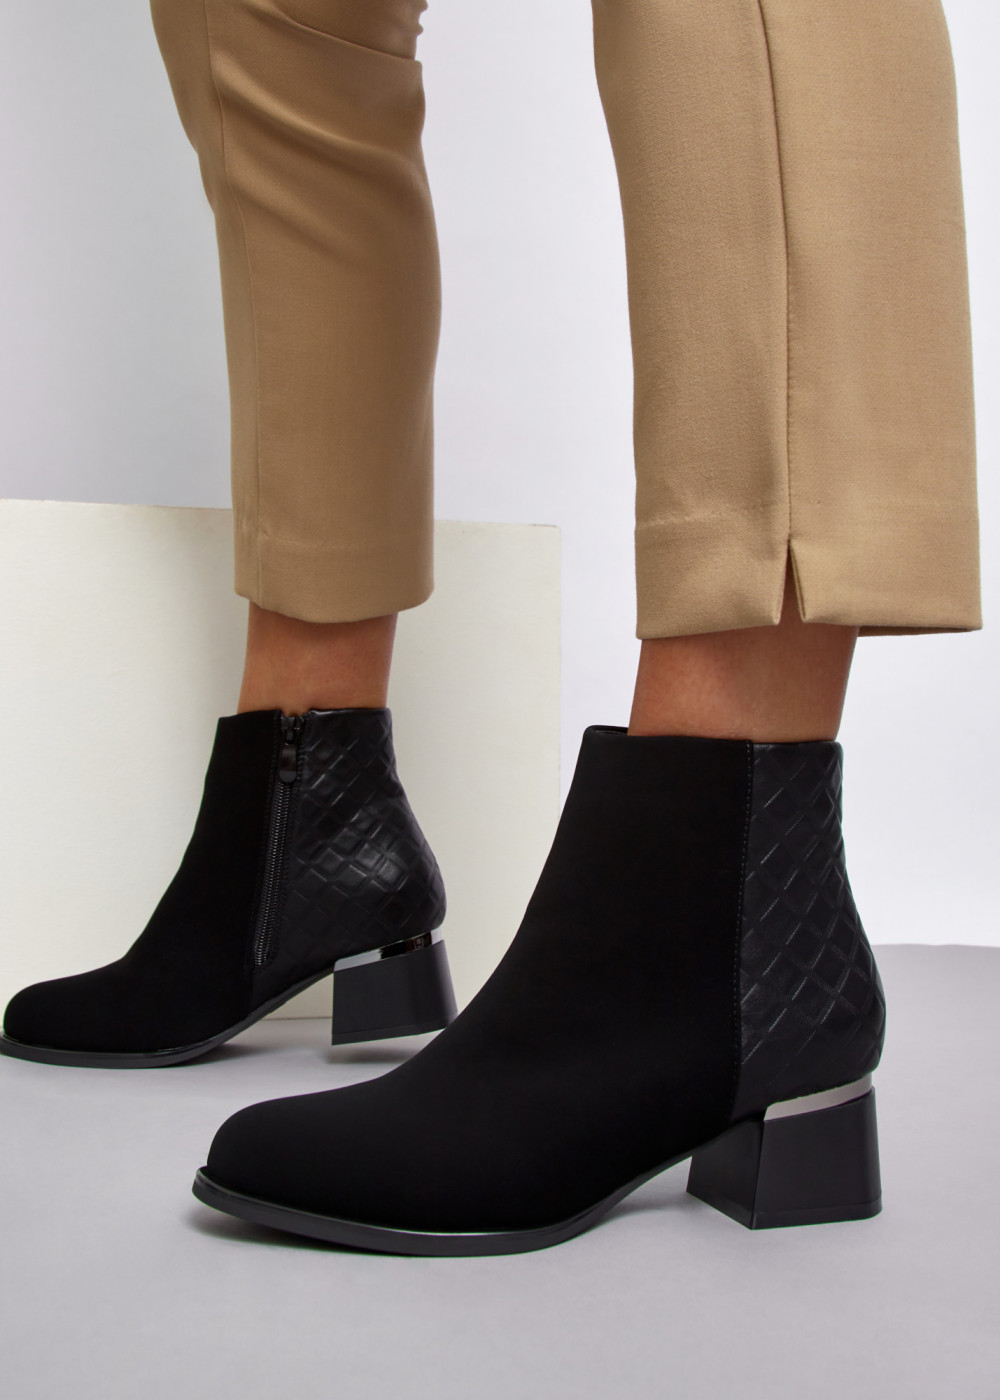 Black diamond pattern heeled ankle boots 4